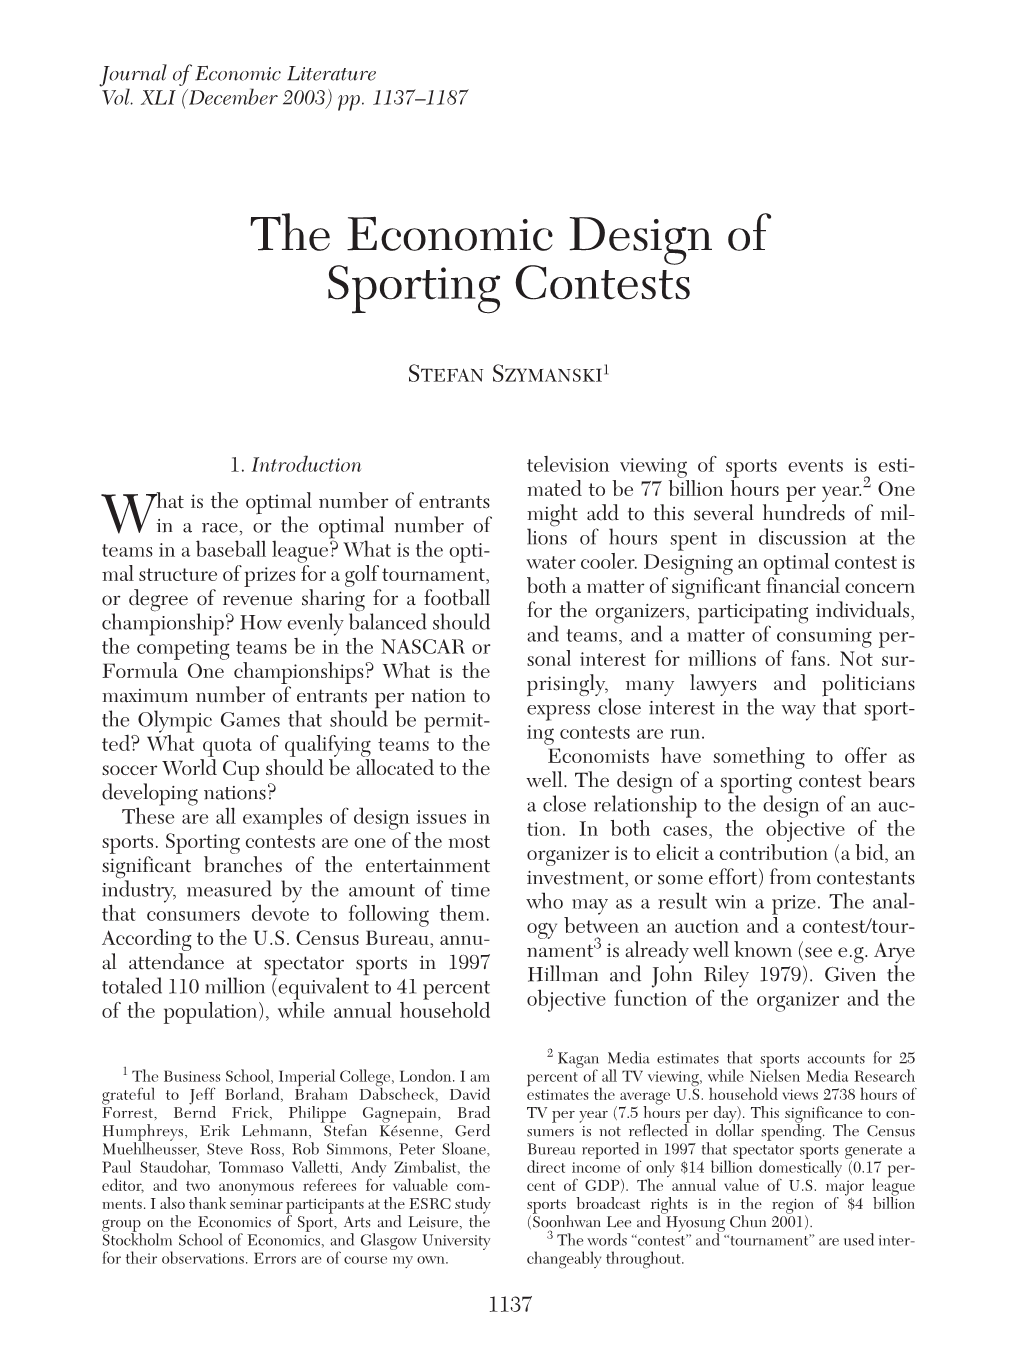 Szymanski: Economic Design of Sporting Contests 1139